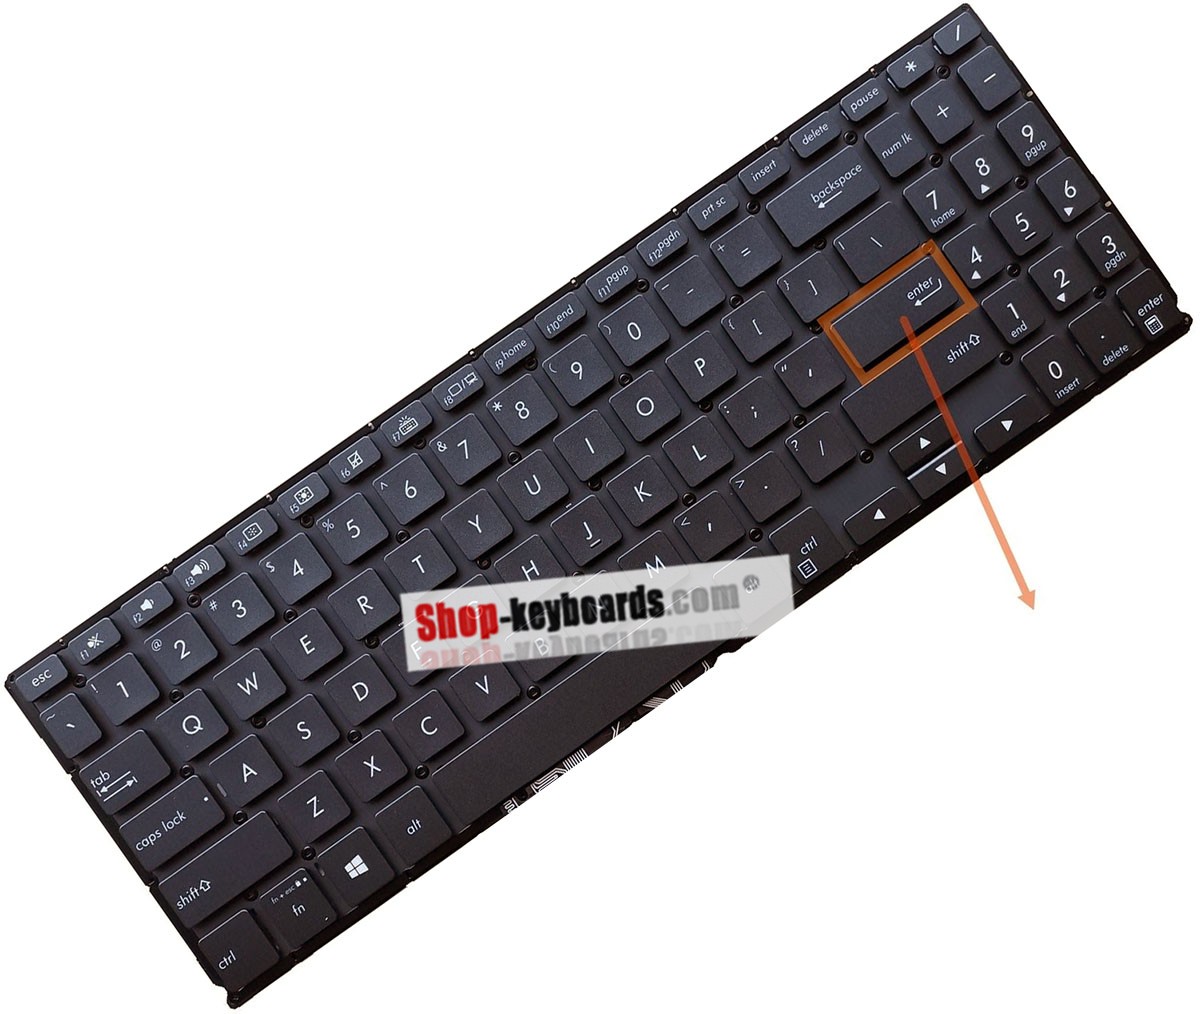 Asus 0KNB0-563BLA00 Keyboard replacement